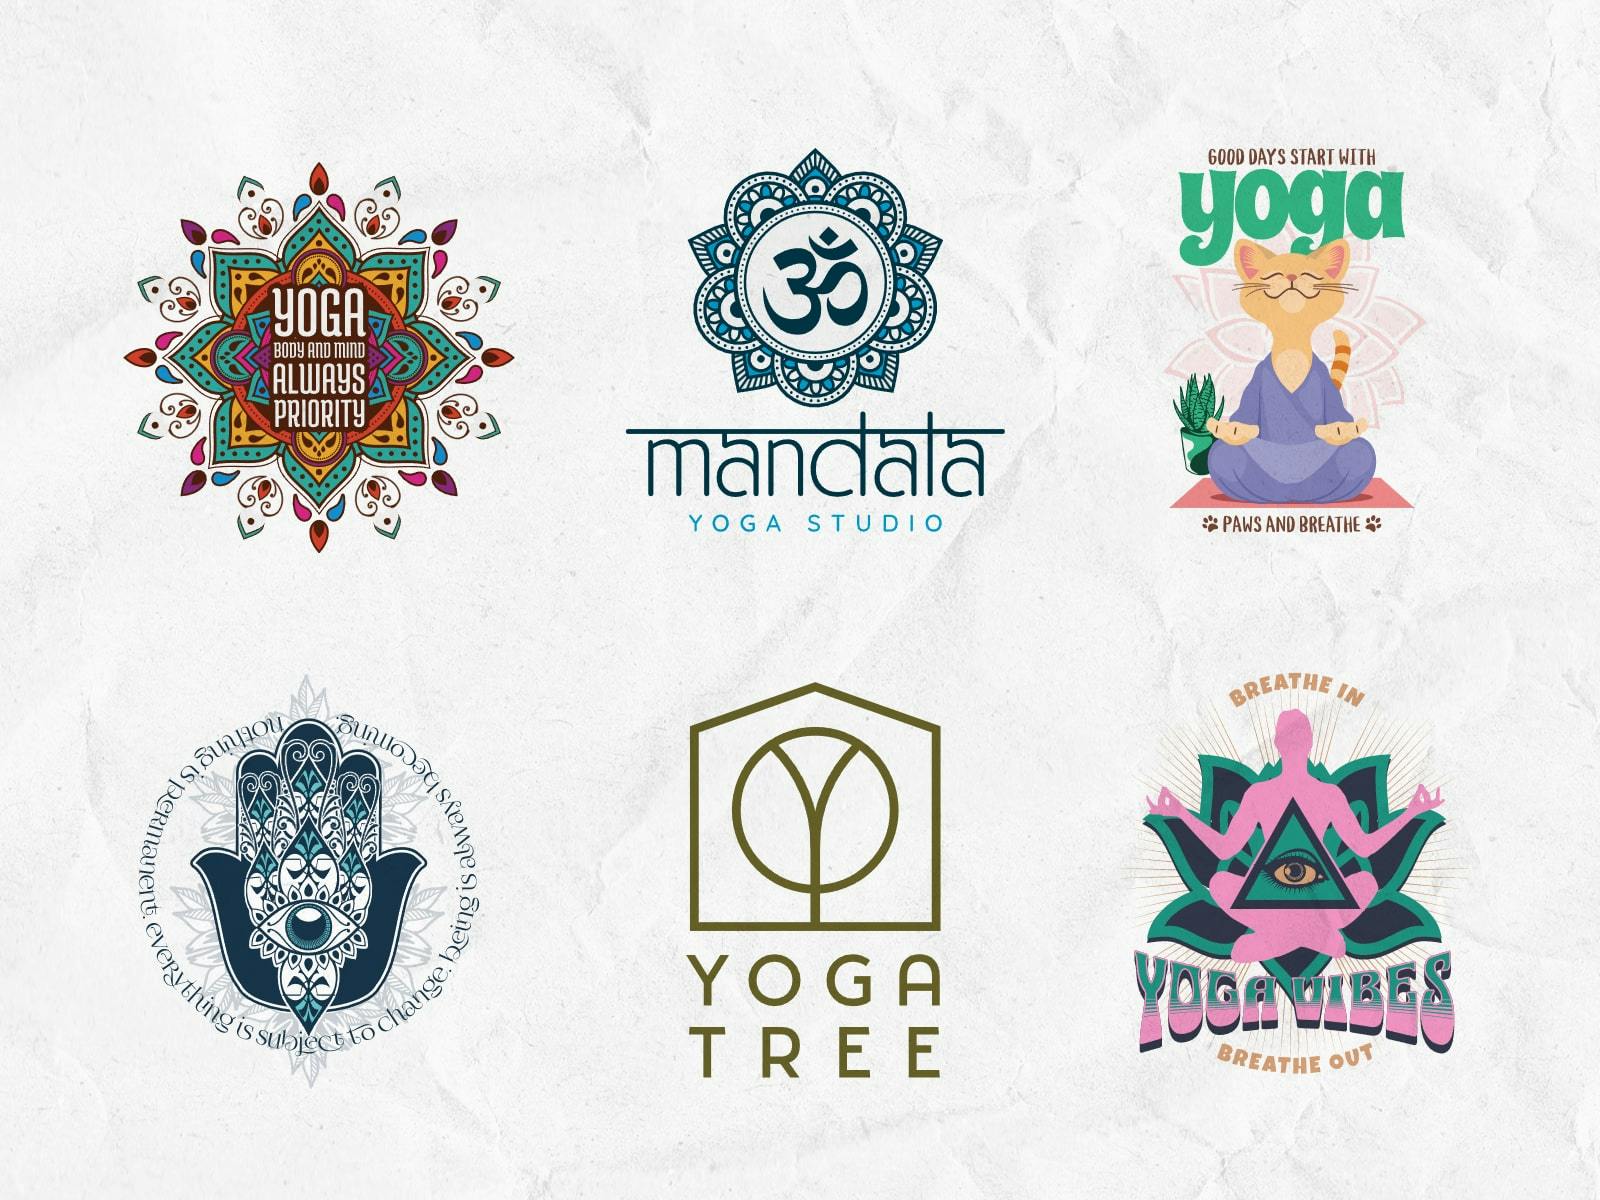 Typography-focused Yoga Studio T-shirts T-Shirt: Collection of typography-focused yoga studio T-shirt designs